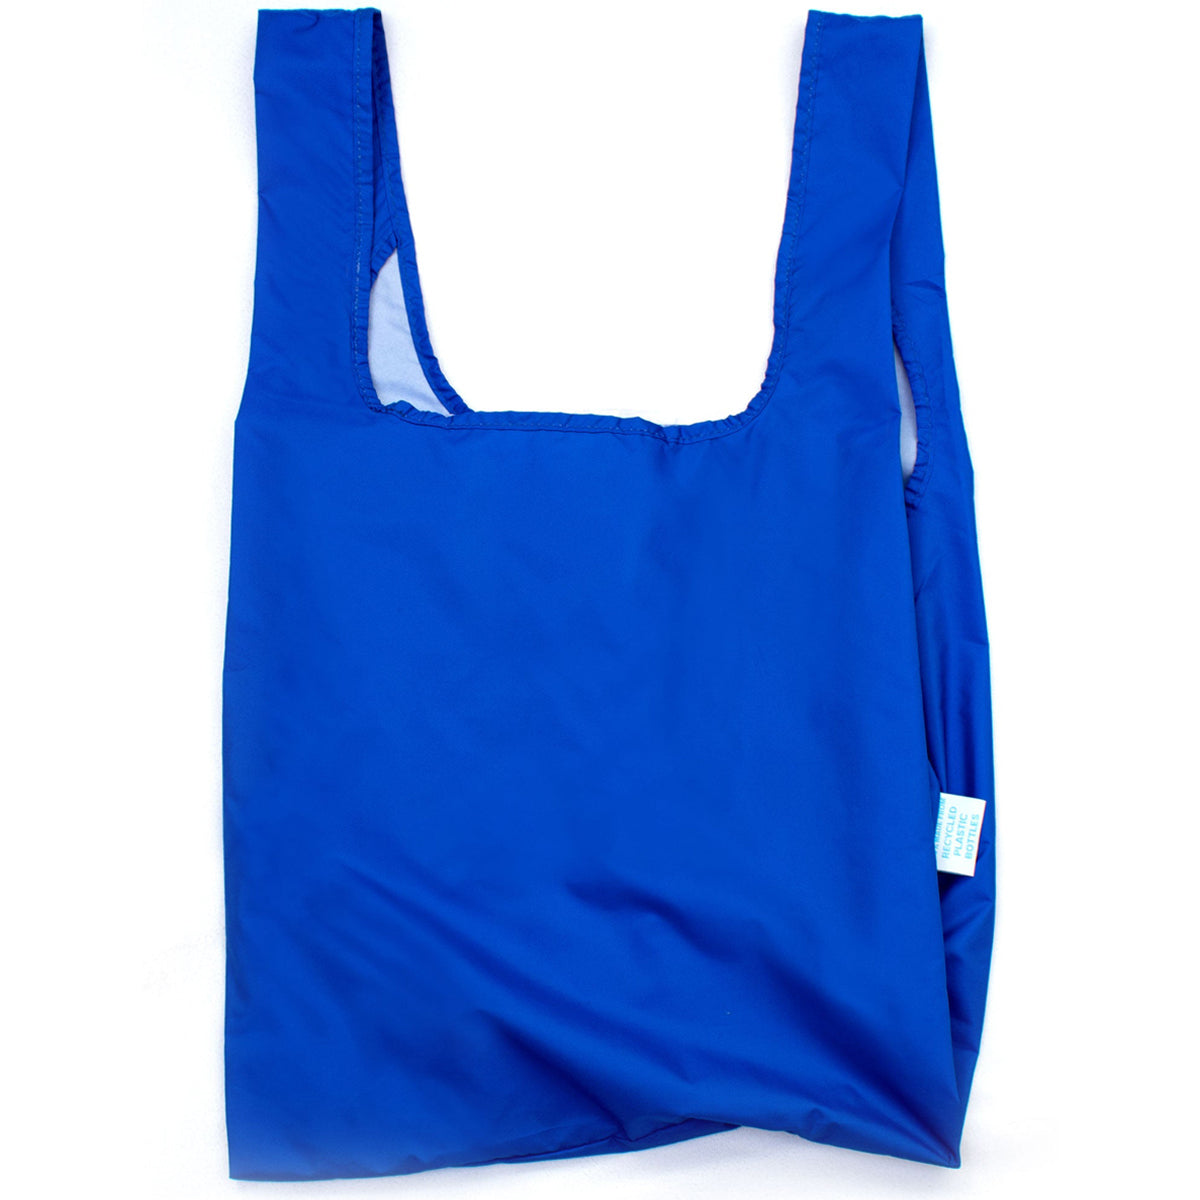 Kind Bag Reusable Foldaway Tote - Sapphire Blue 2